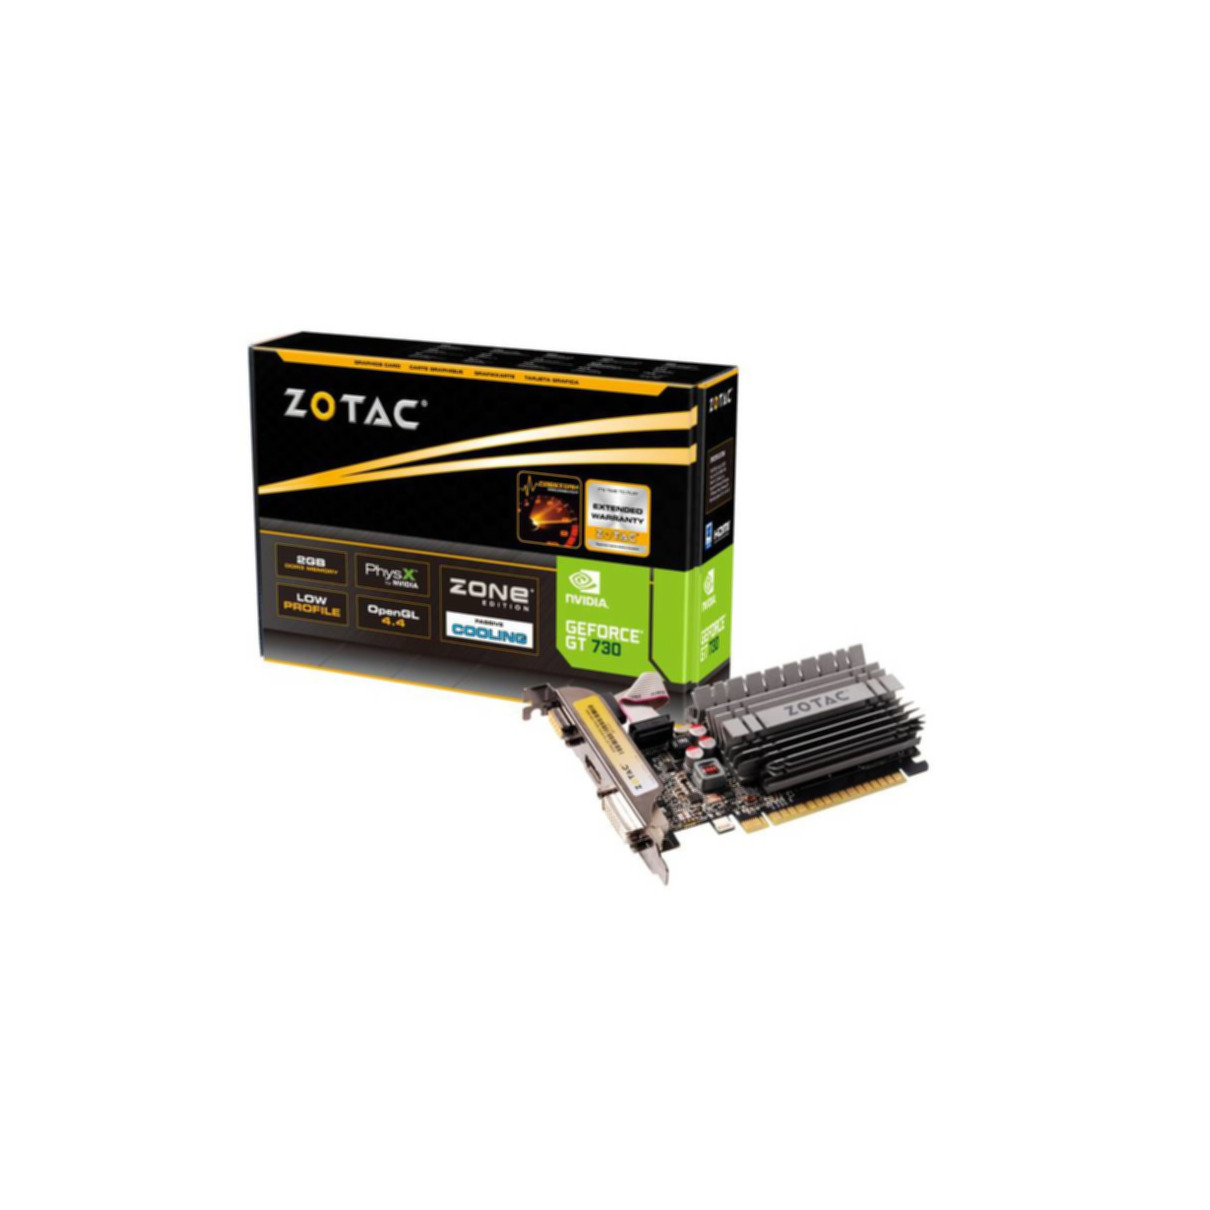 (NVIDIA, GT Grafikkarte) Zotac 2GB ZONE GeForce® VGA ZOTAC 730 Edition